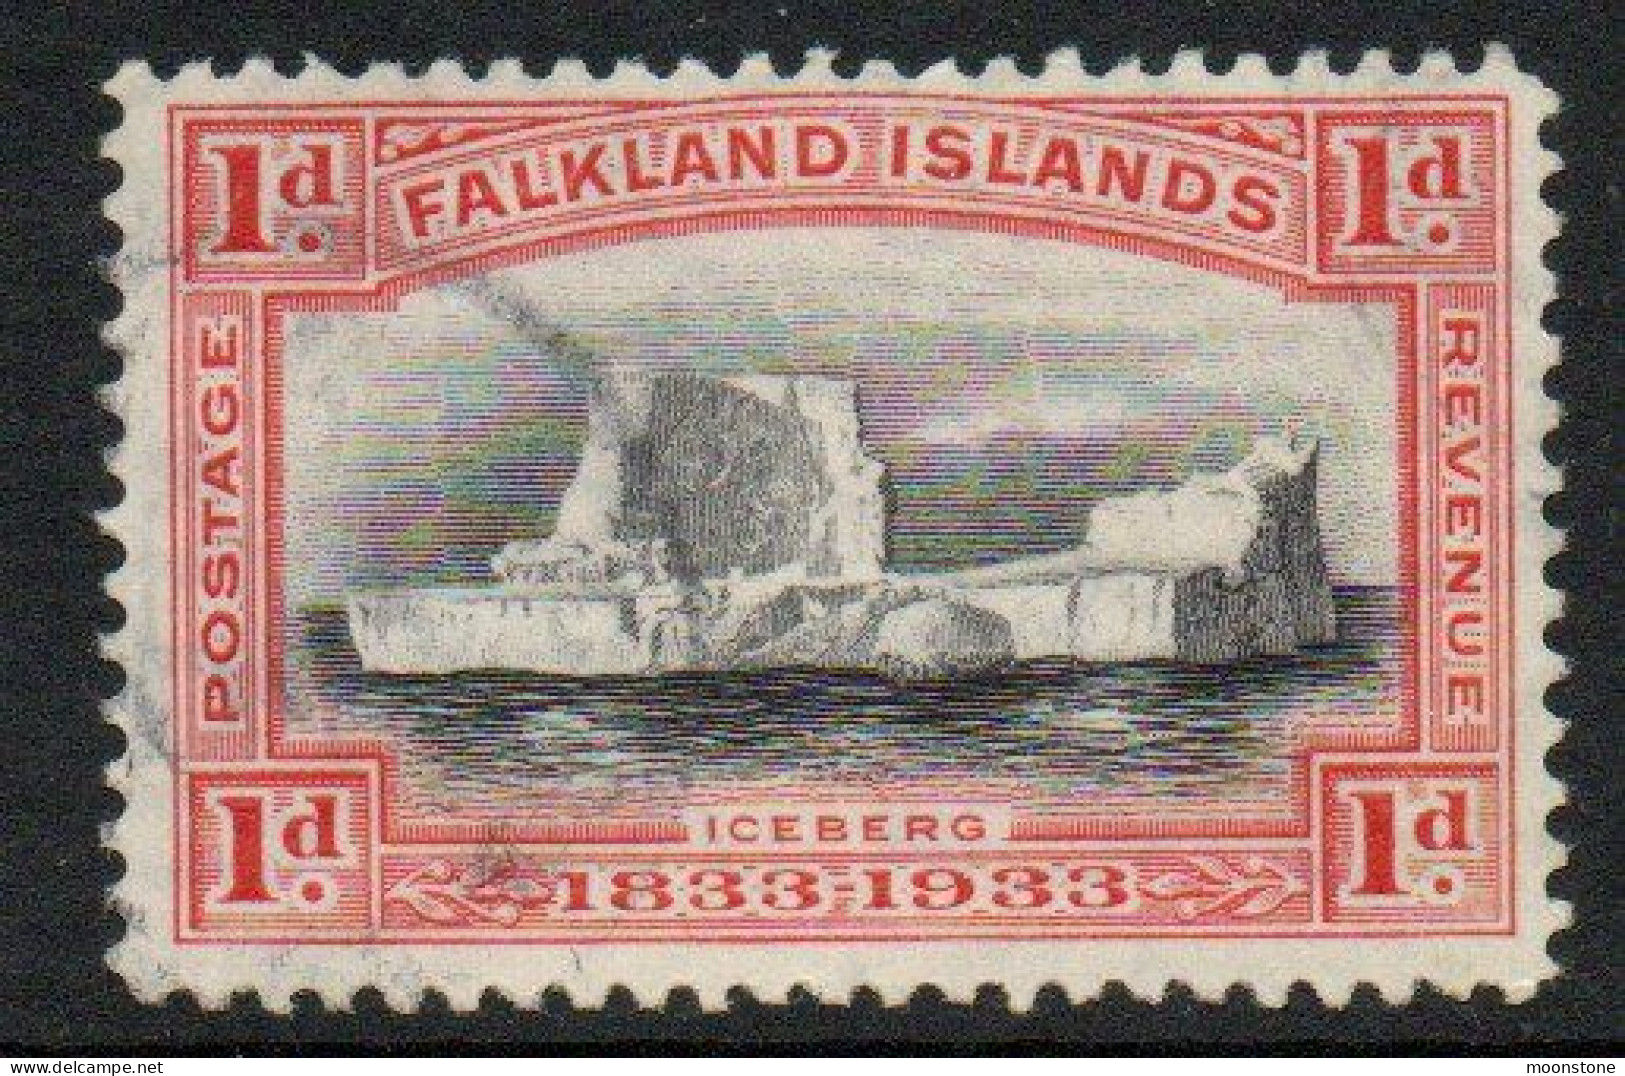 Falkland Islands GV 1933 Centenary 1d Value, Wmk. Multiple Script CA, Used, SG 128 - Falkland Islands